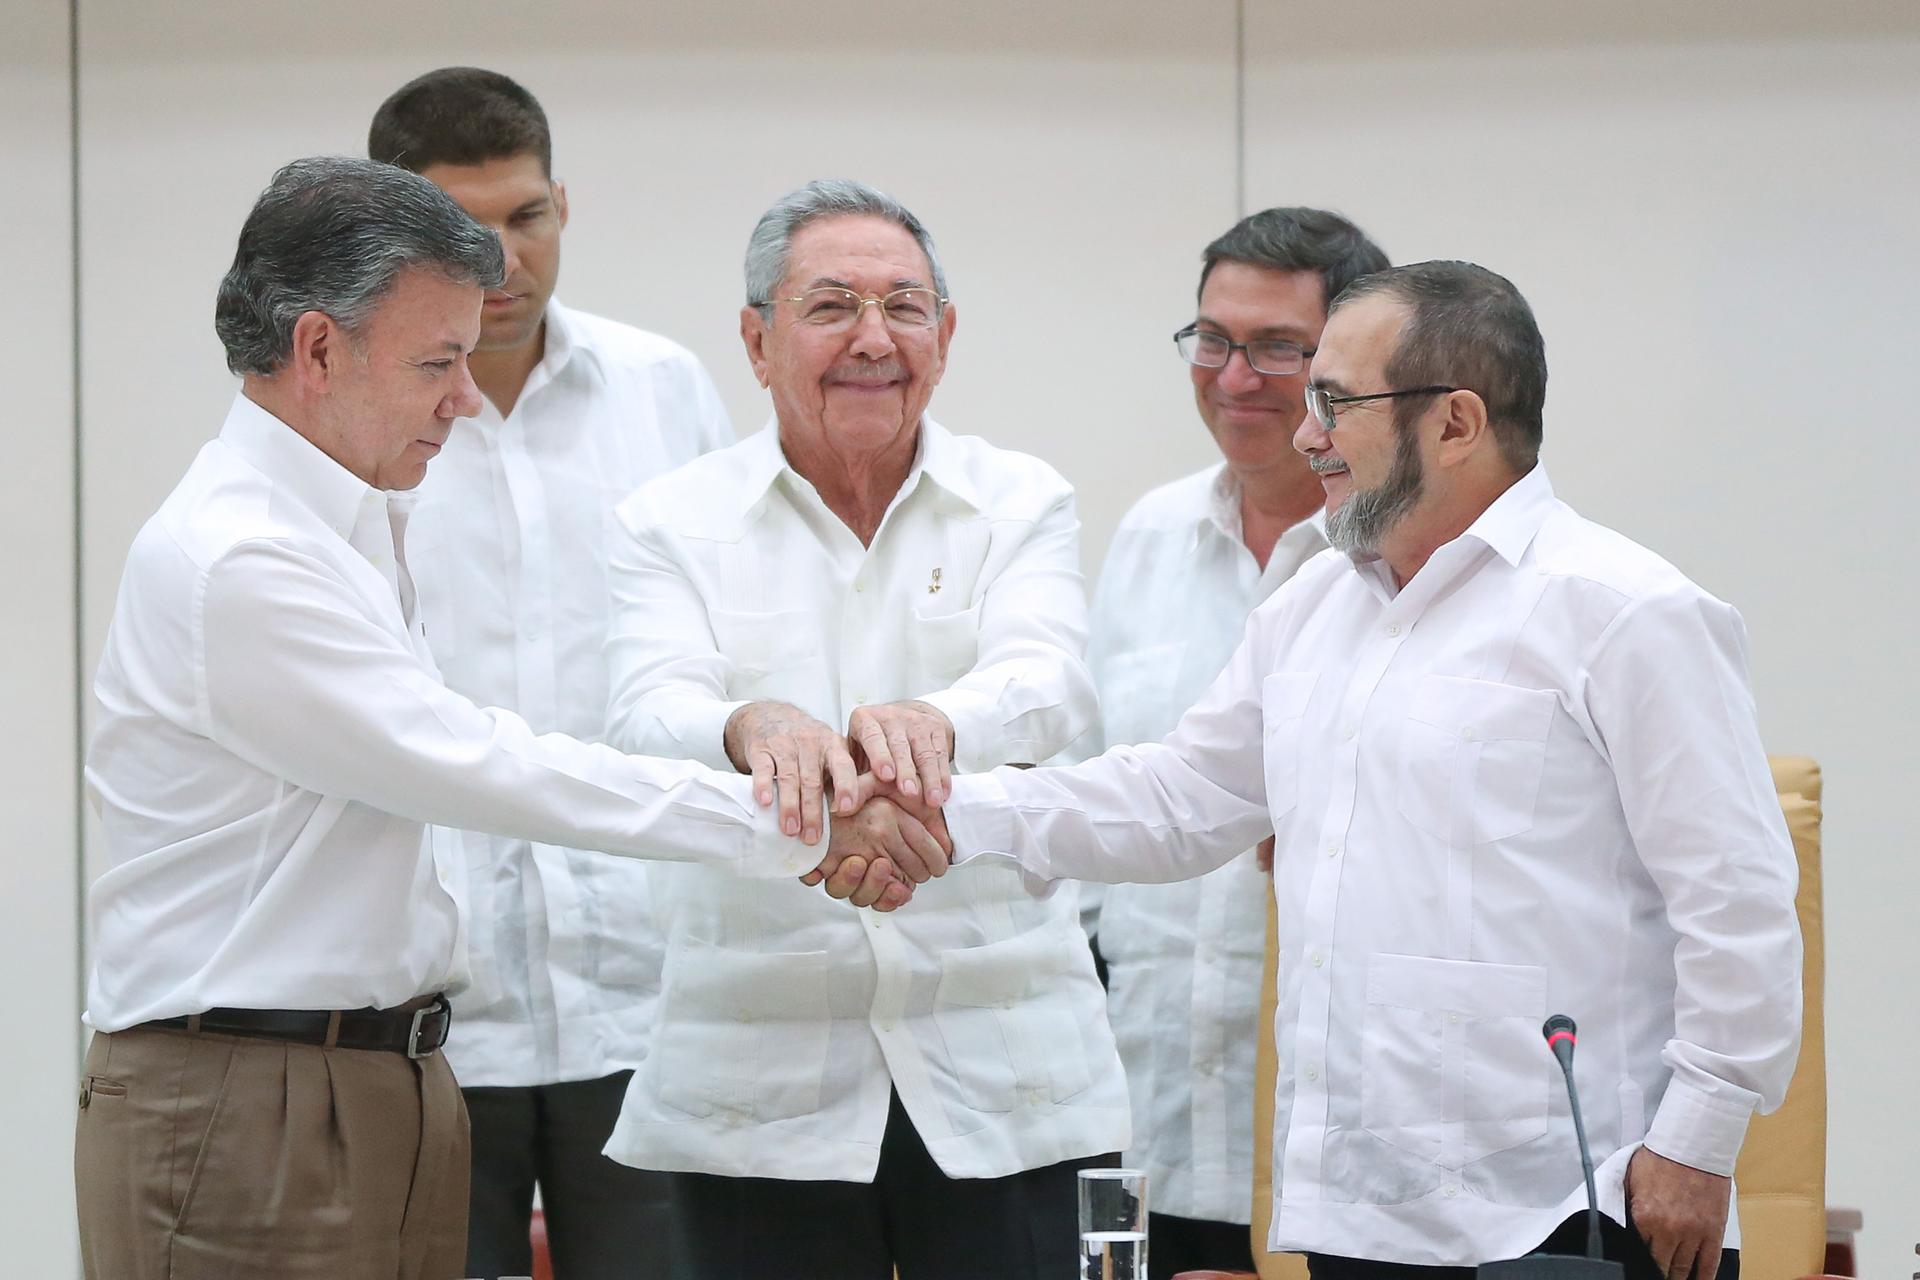 Cuba's President Raul Castro oversees a handshake between Colombia's President Juan Manuel Santos (left) and FARC rebel leader Rodrigo Londono (right), better known by the nom de guerre Timochenko. 